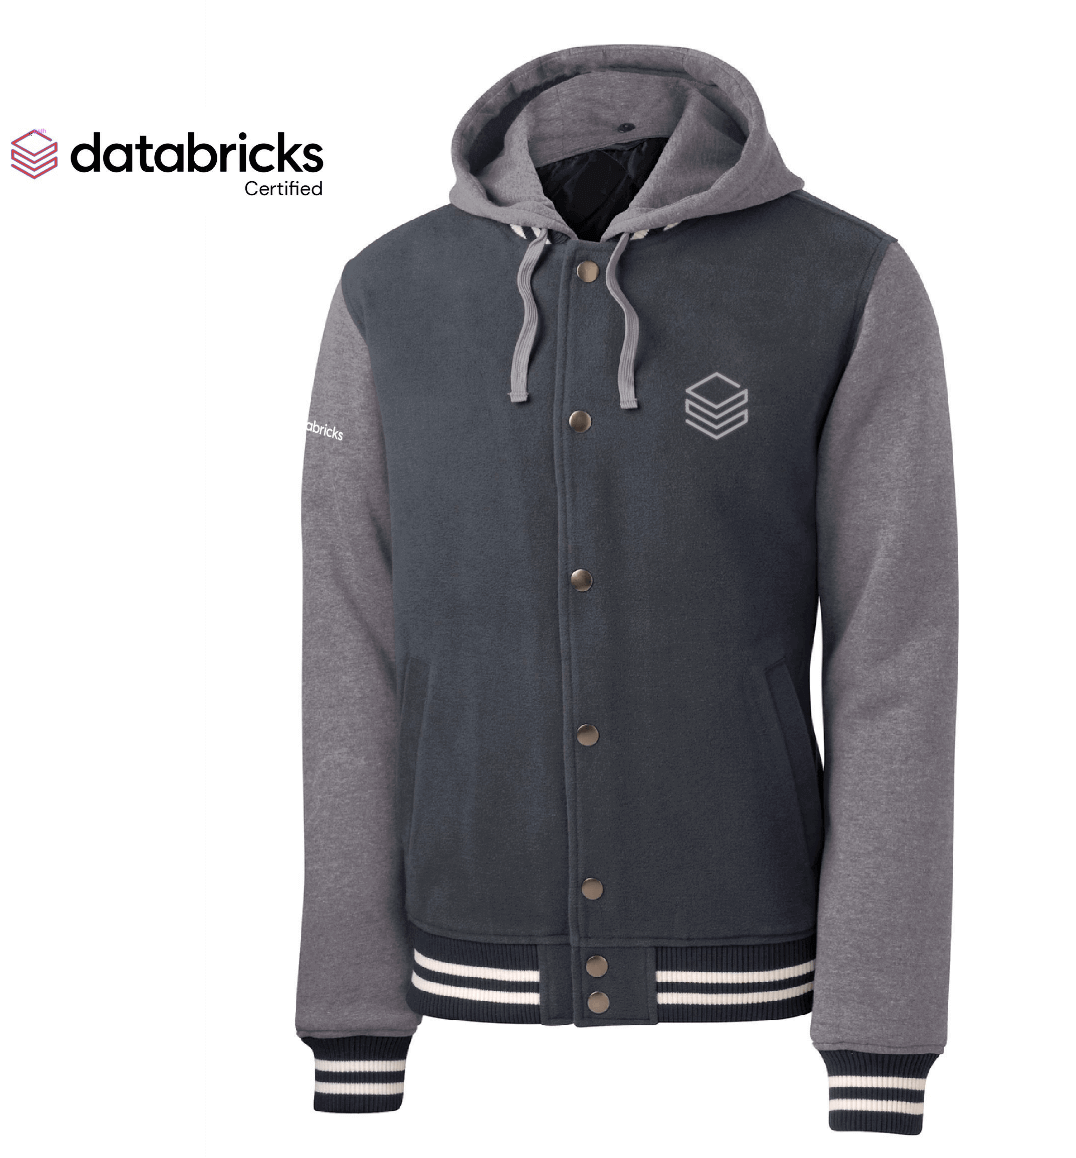 Databricks Certified jacket